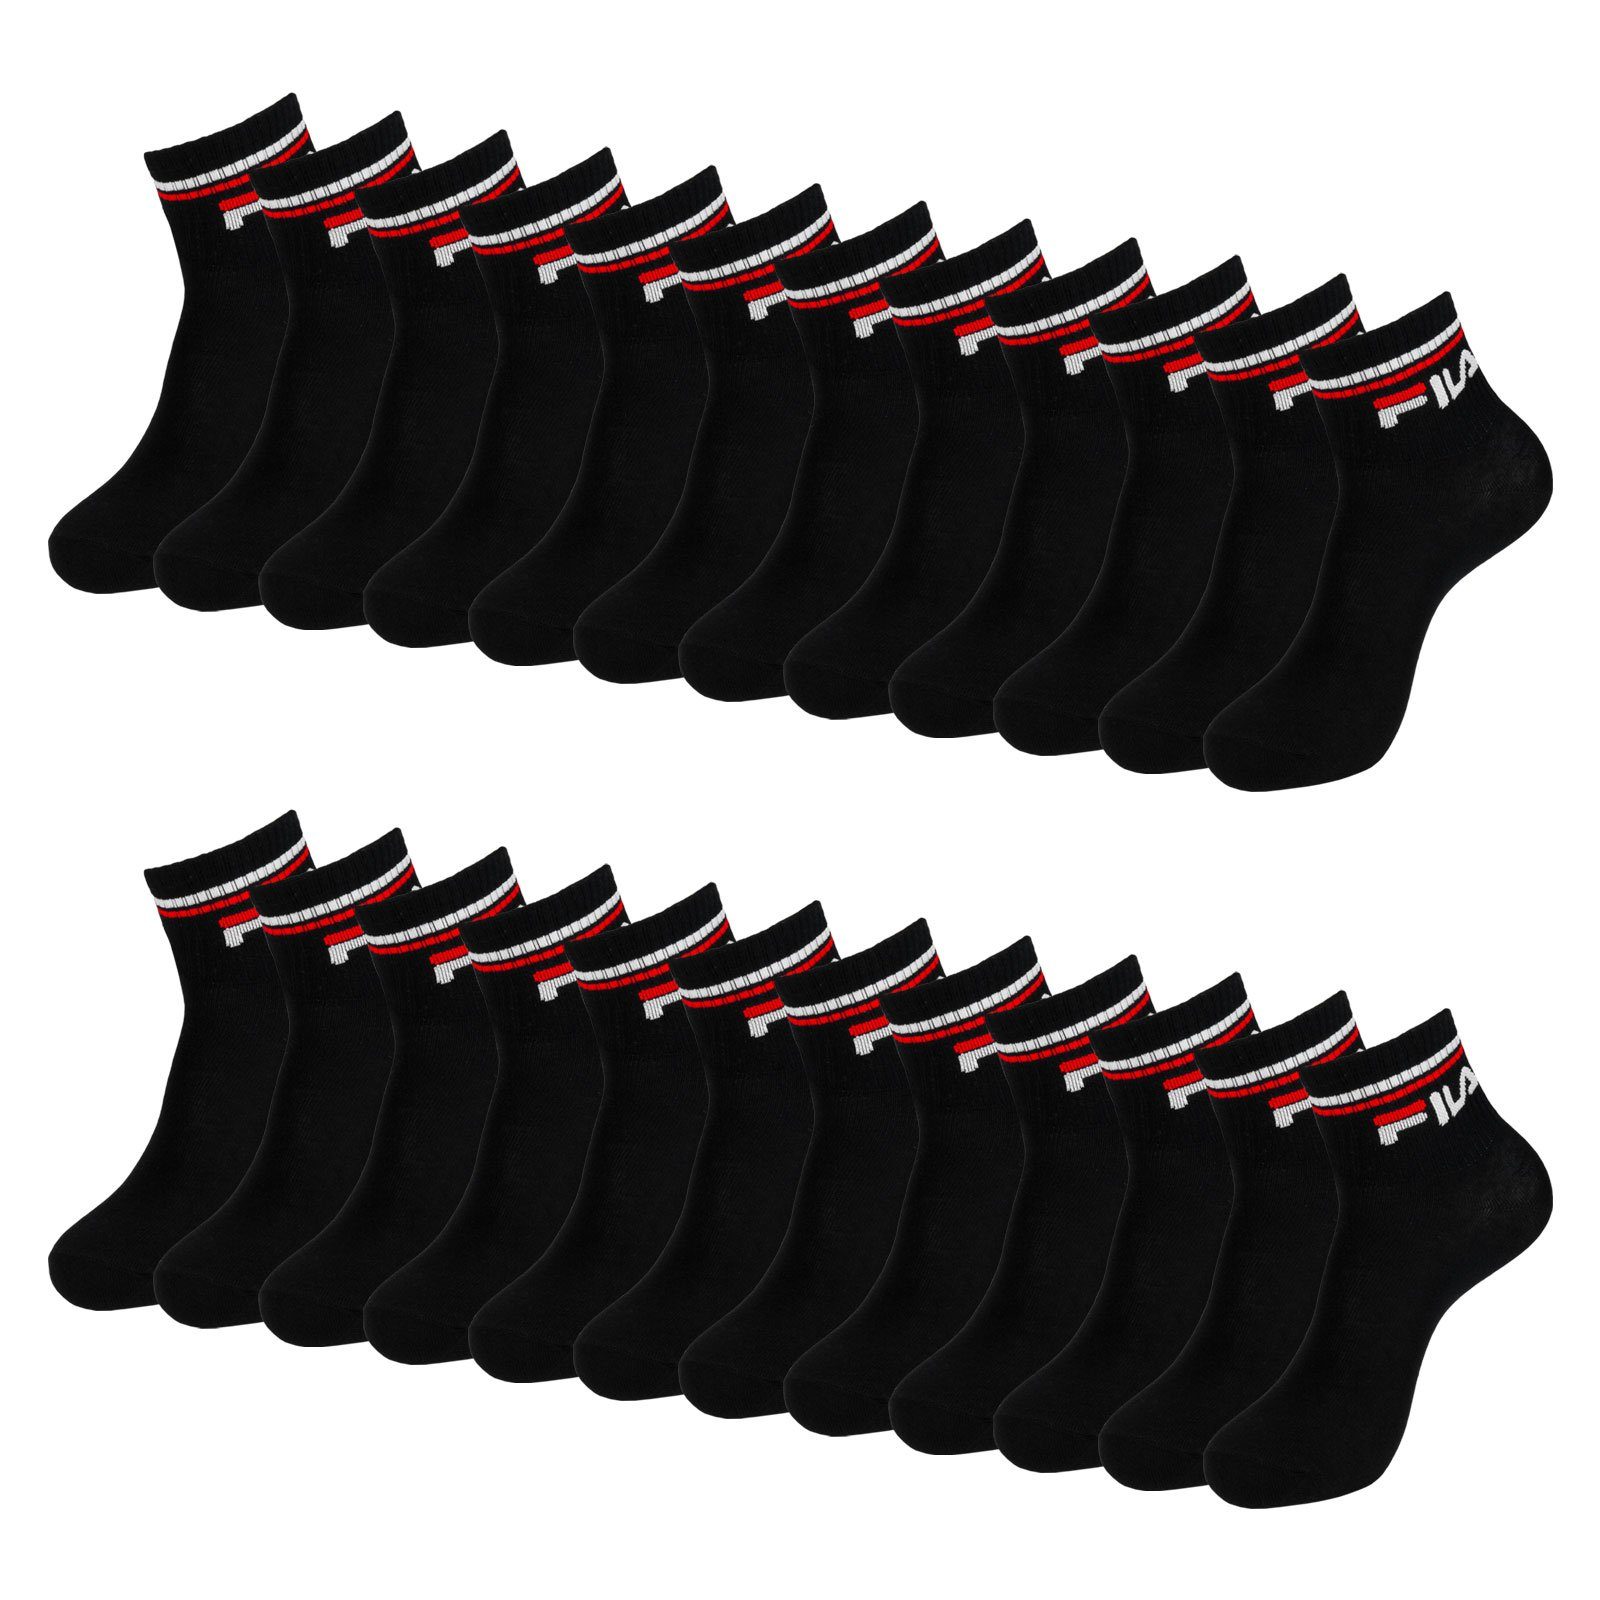 Fila Kurzsocken Quarter Socks Calza (12-Paar) im sportlichen Look mit Rippbündchen 200 black | Kurzsocken